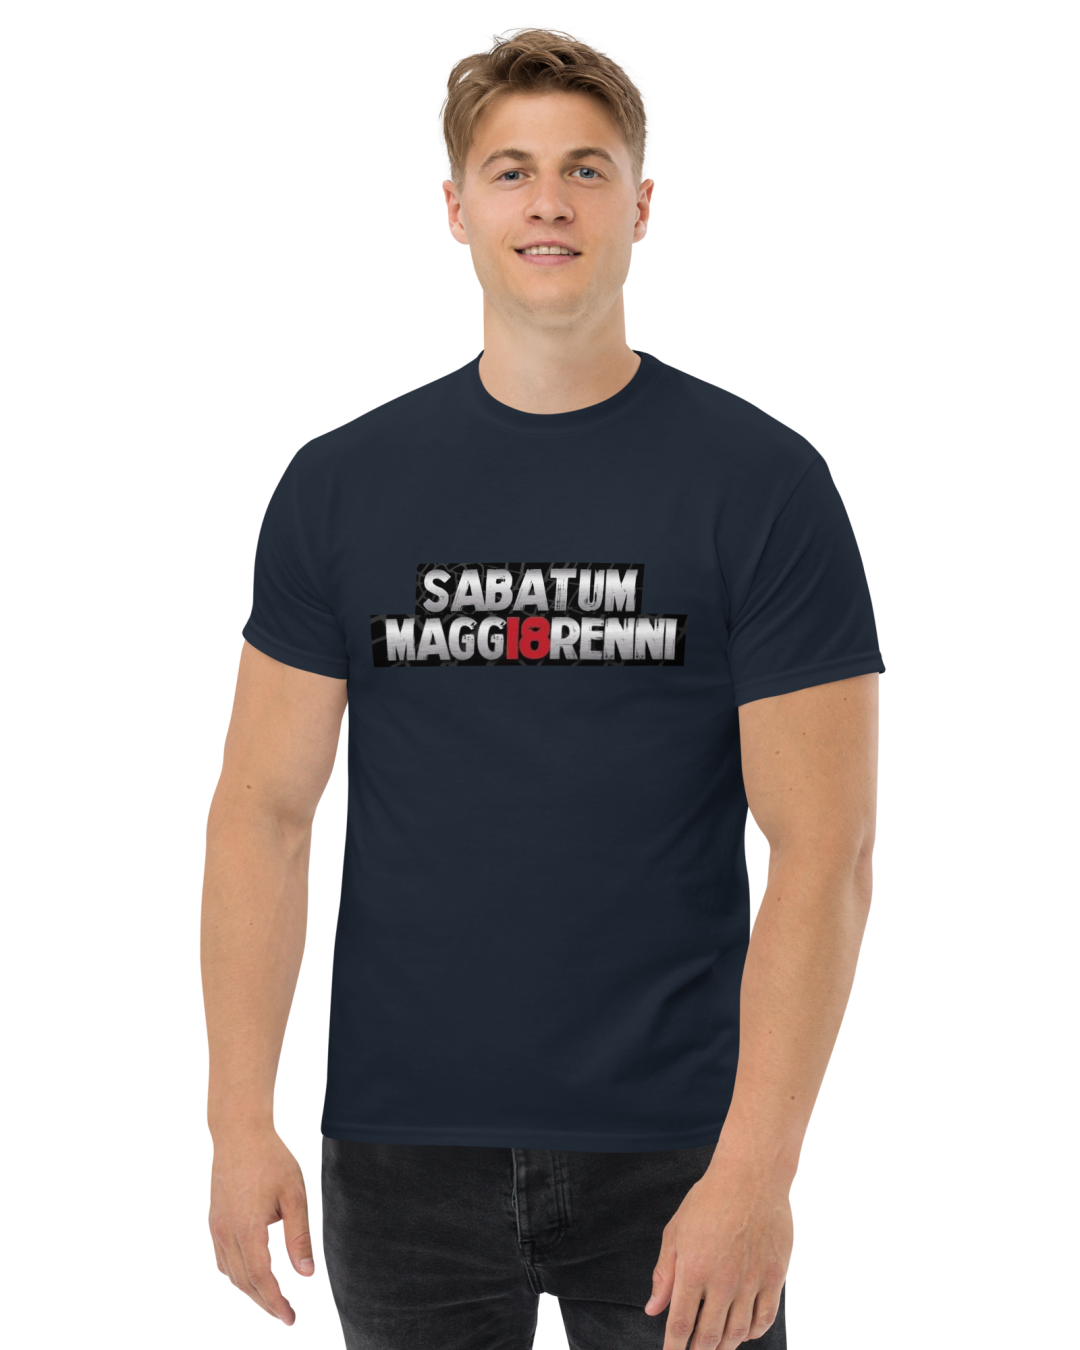 T-shirt Sabatum Quartet "Magg18renni"